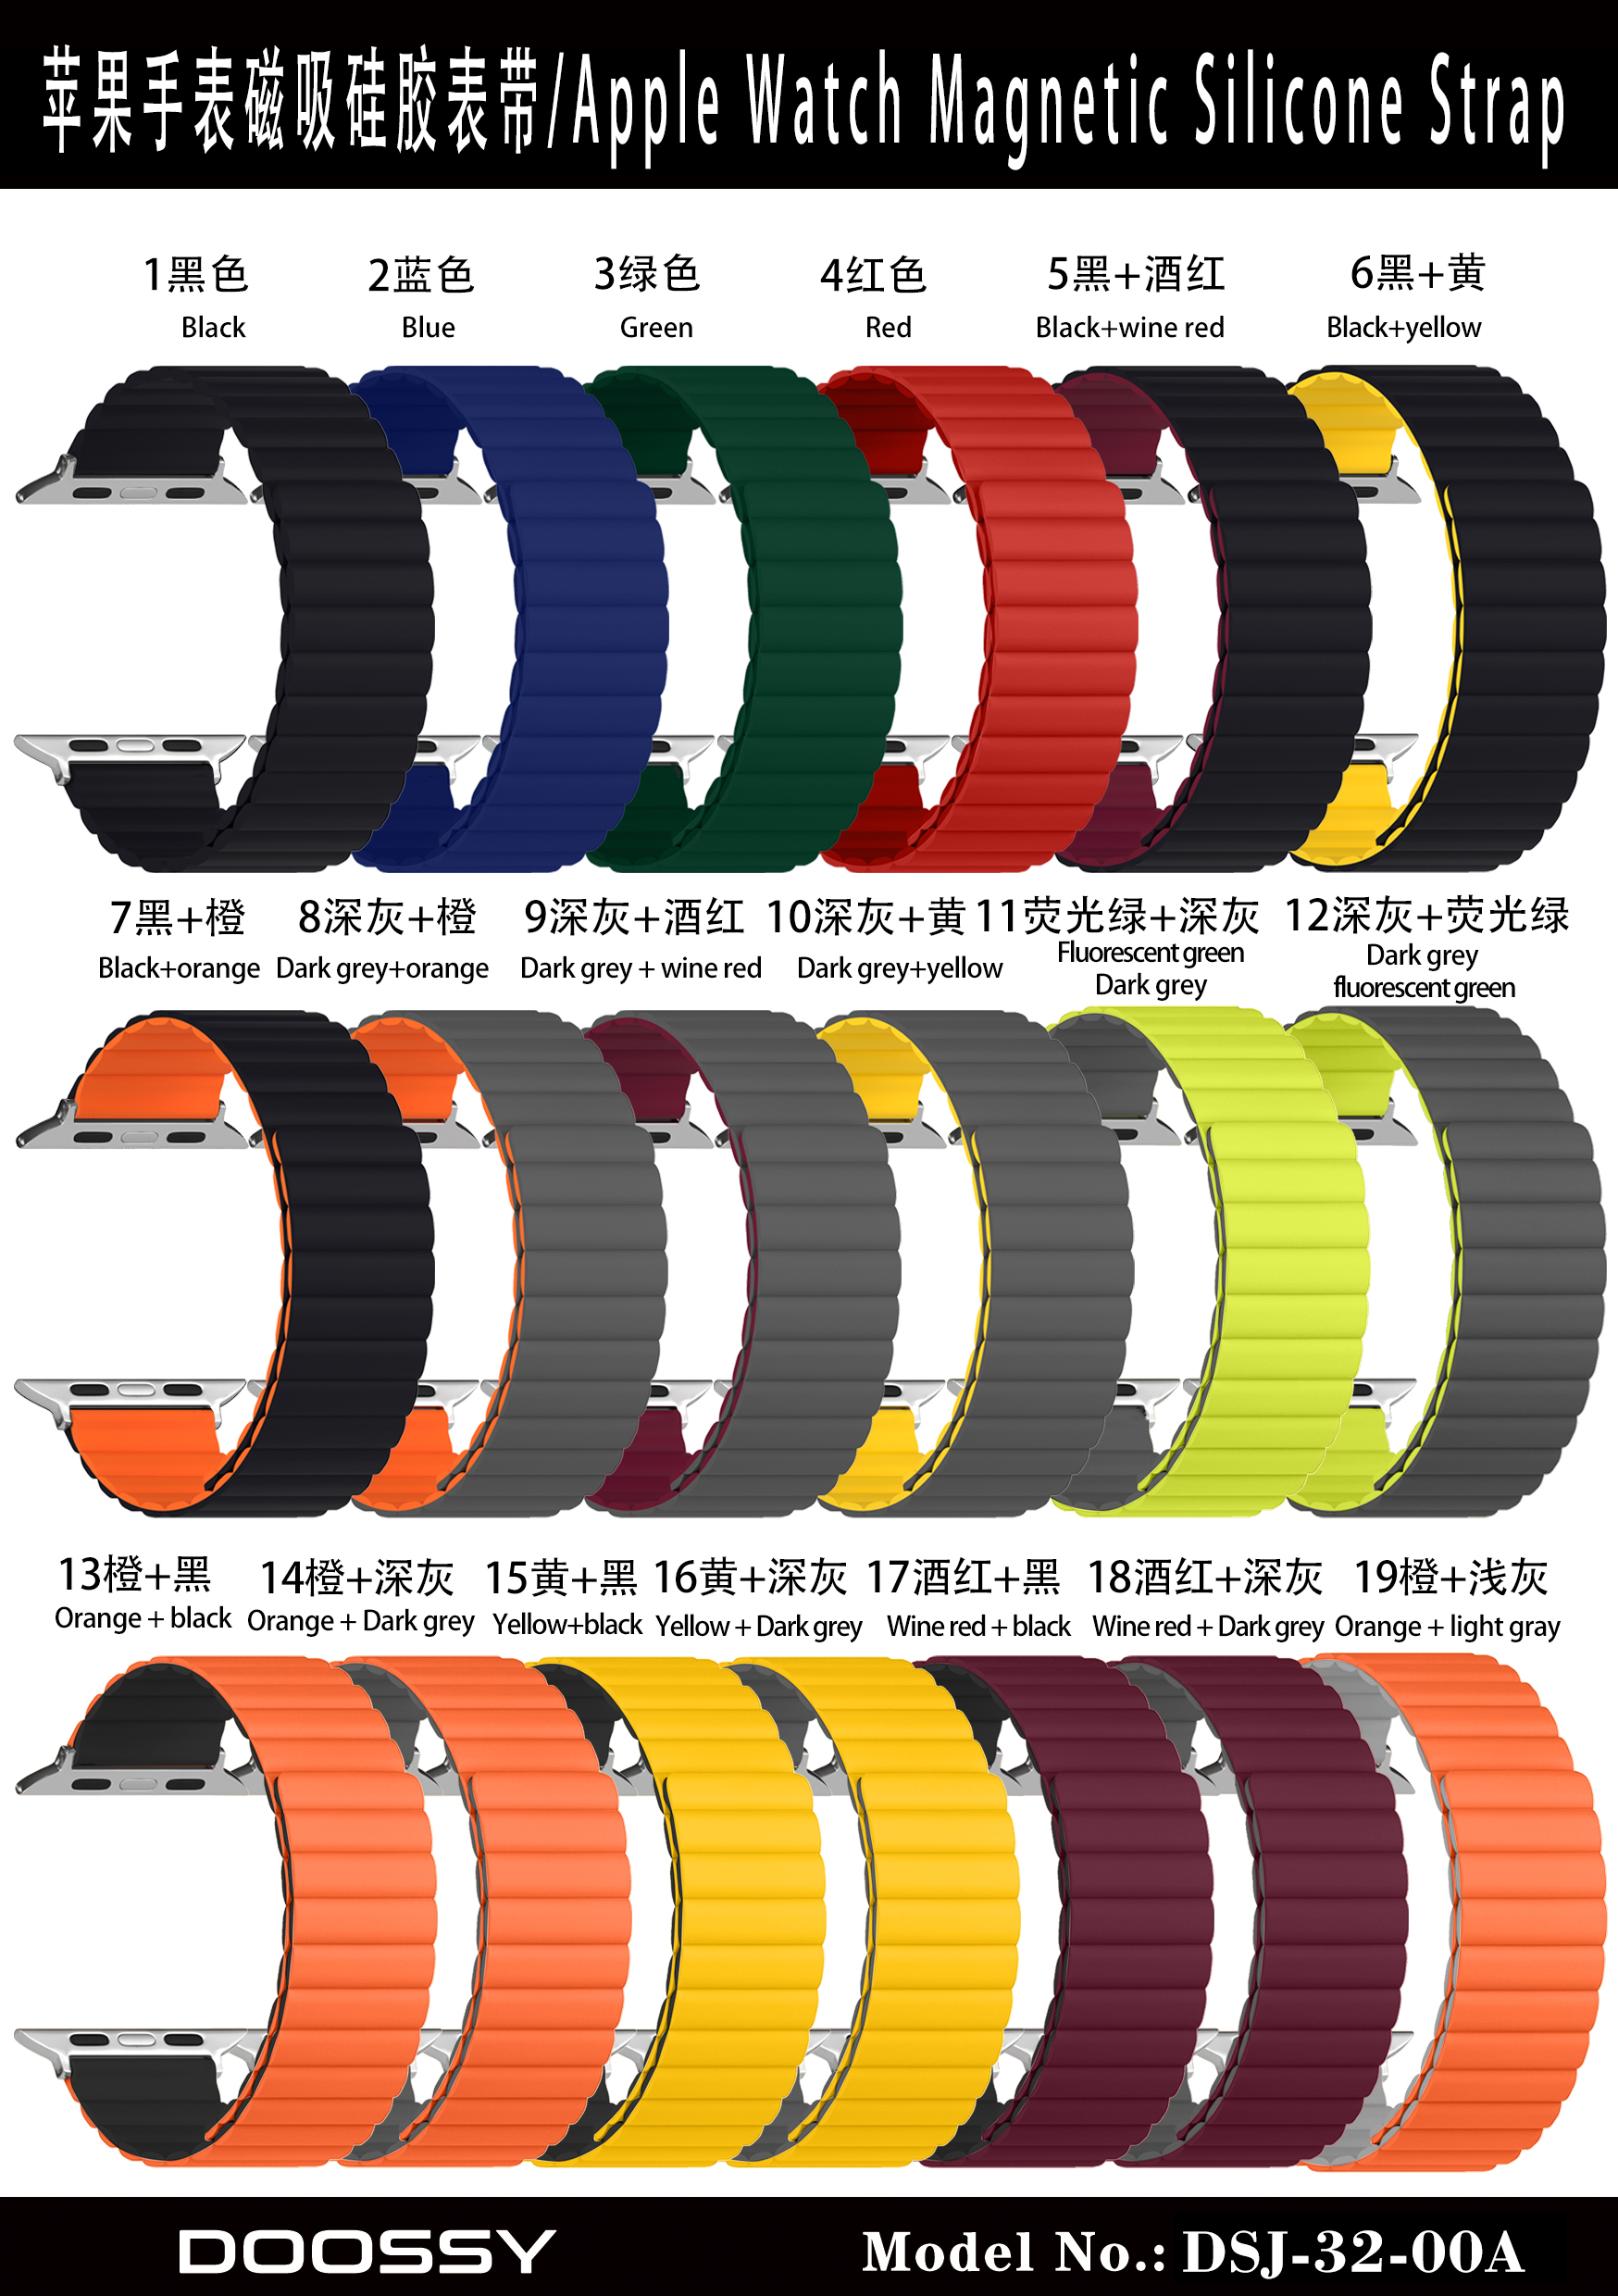 DSJ-32-00A      苹果手表磁吸硅胶表带颜色图.jpg